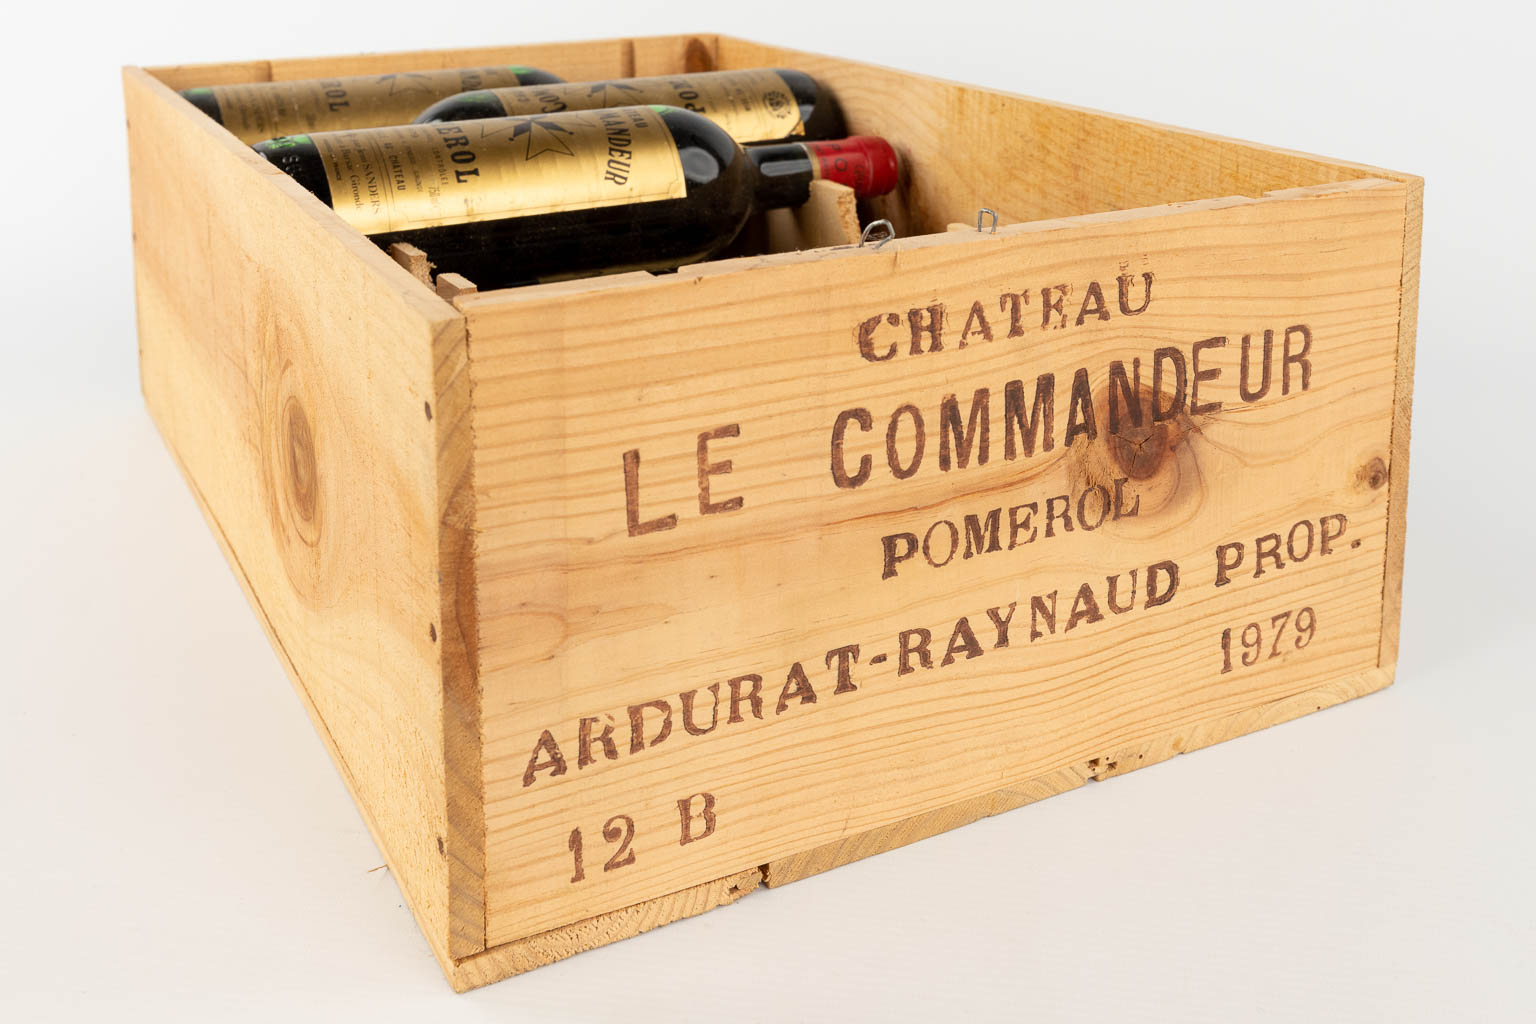 Château Commandeur Pomerol, 1979, a collection of 9 botlles in the original casket.